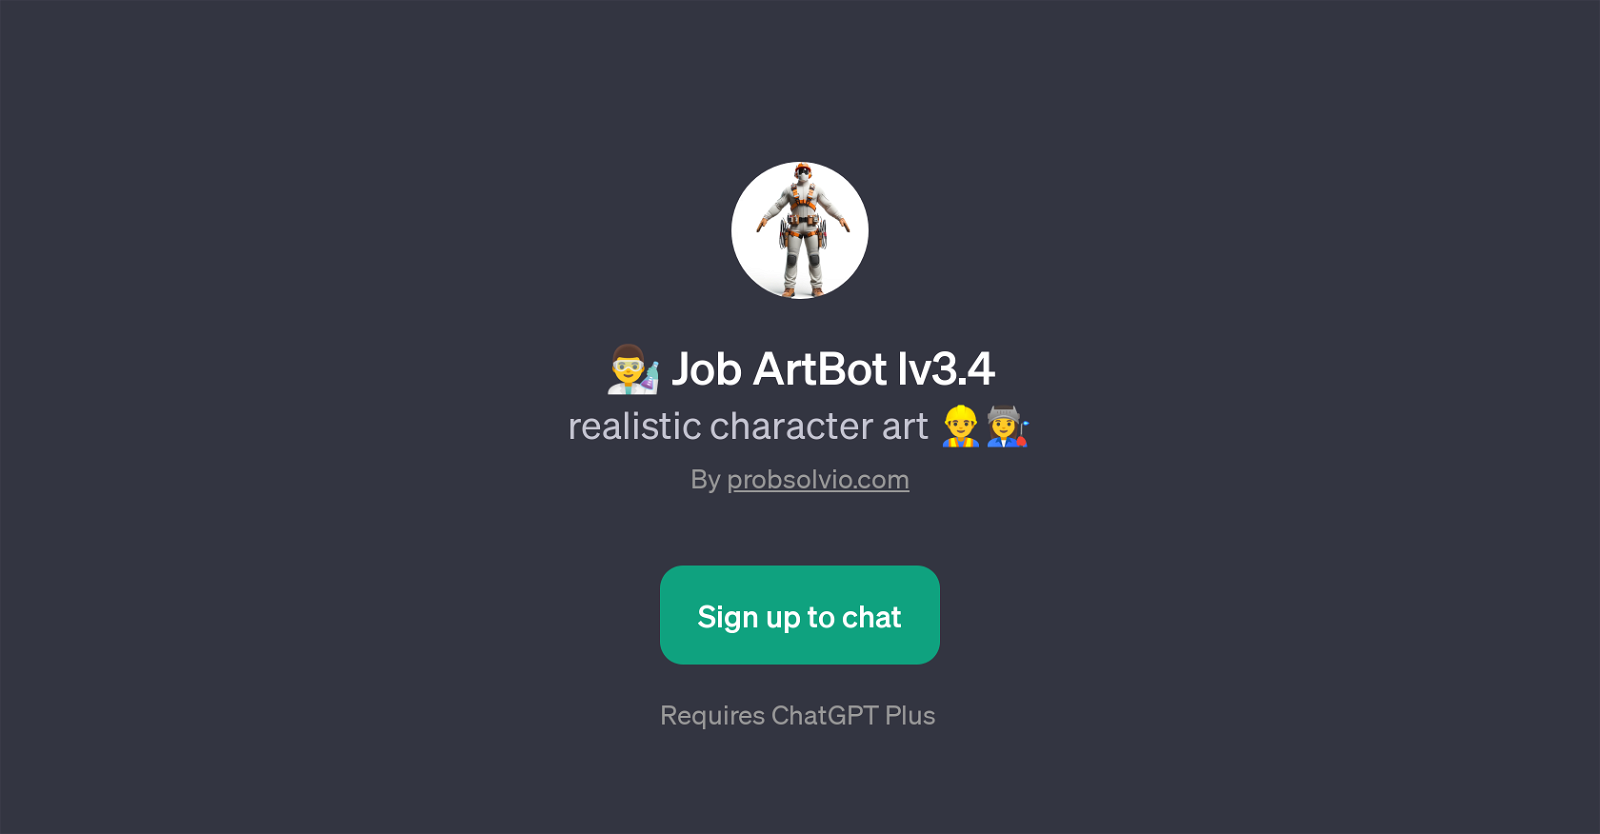 Job ArtBot lv3.4 website